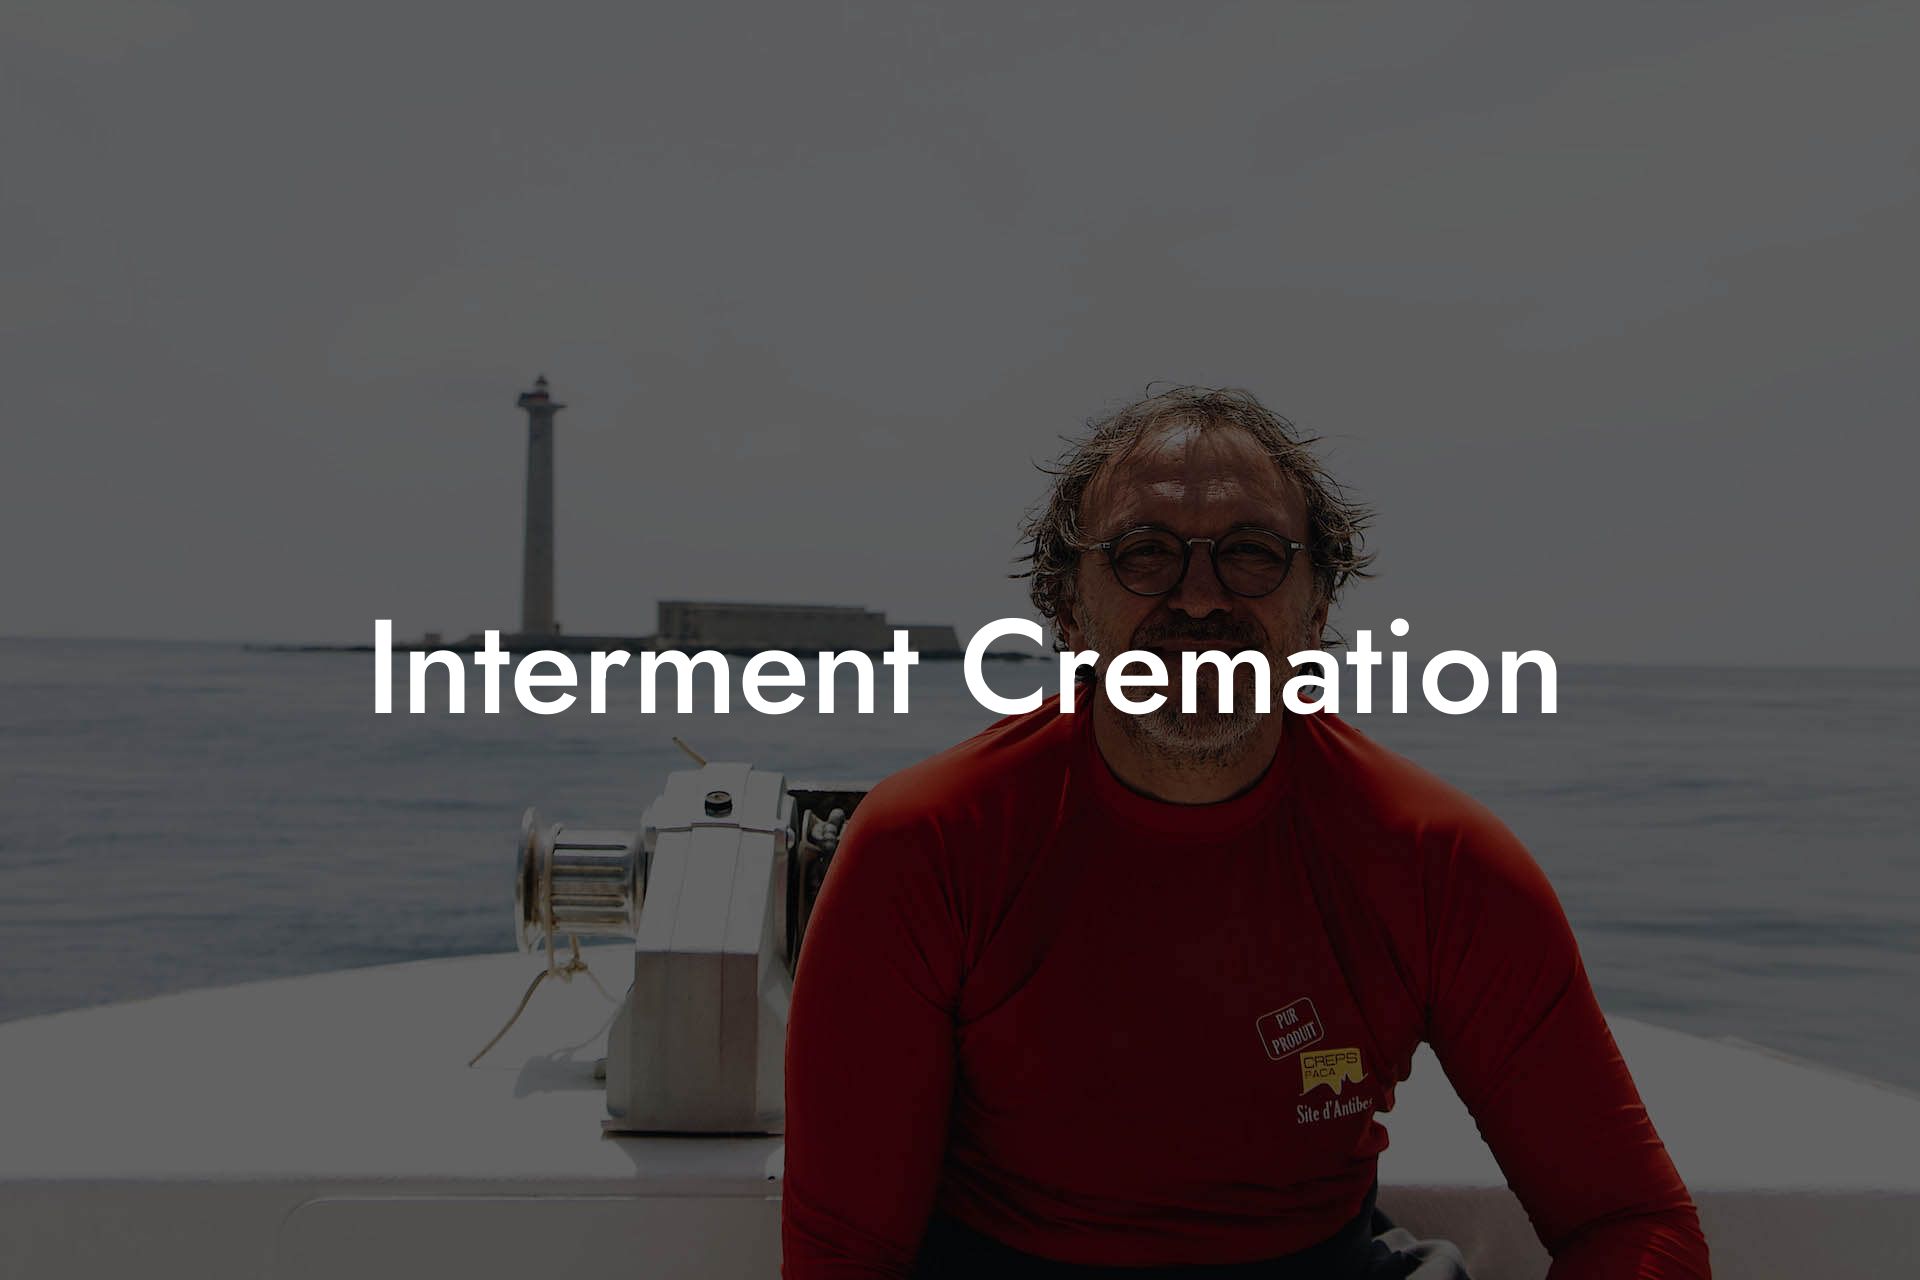 Interment Cremation